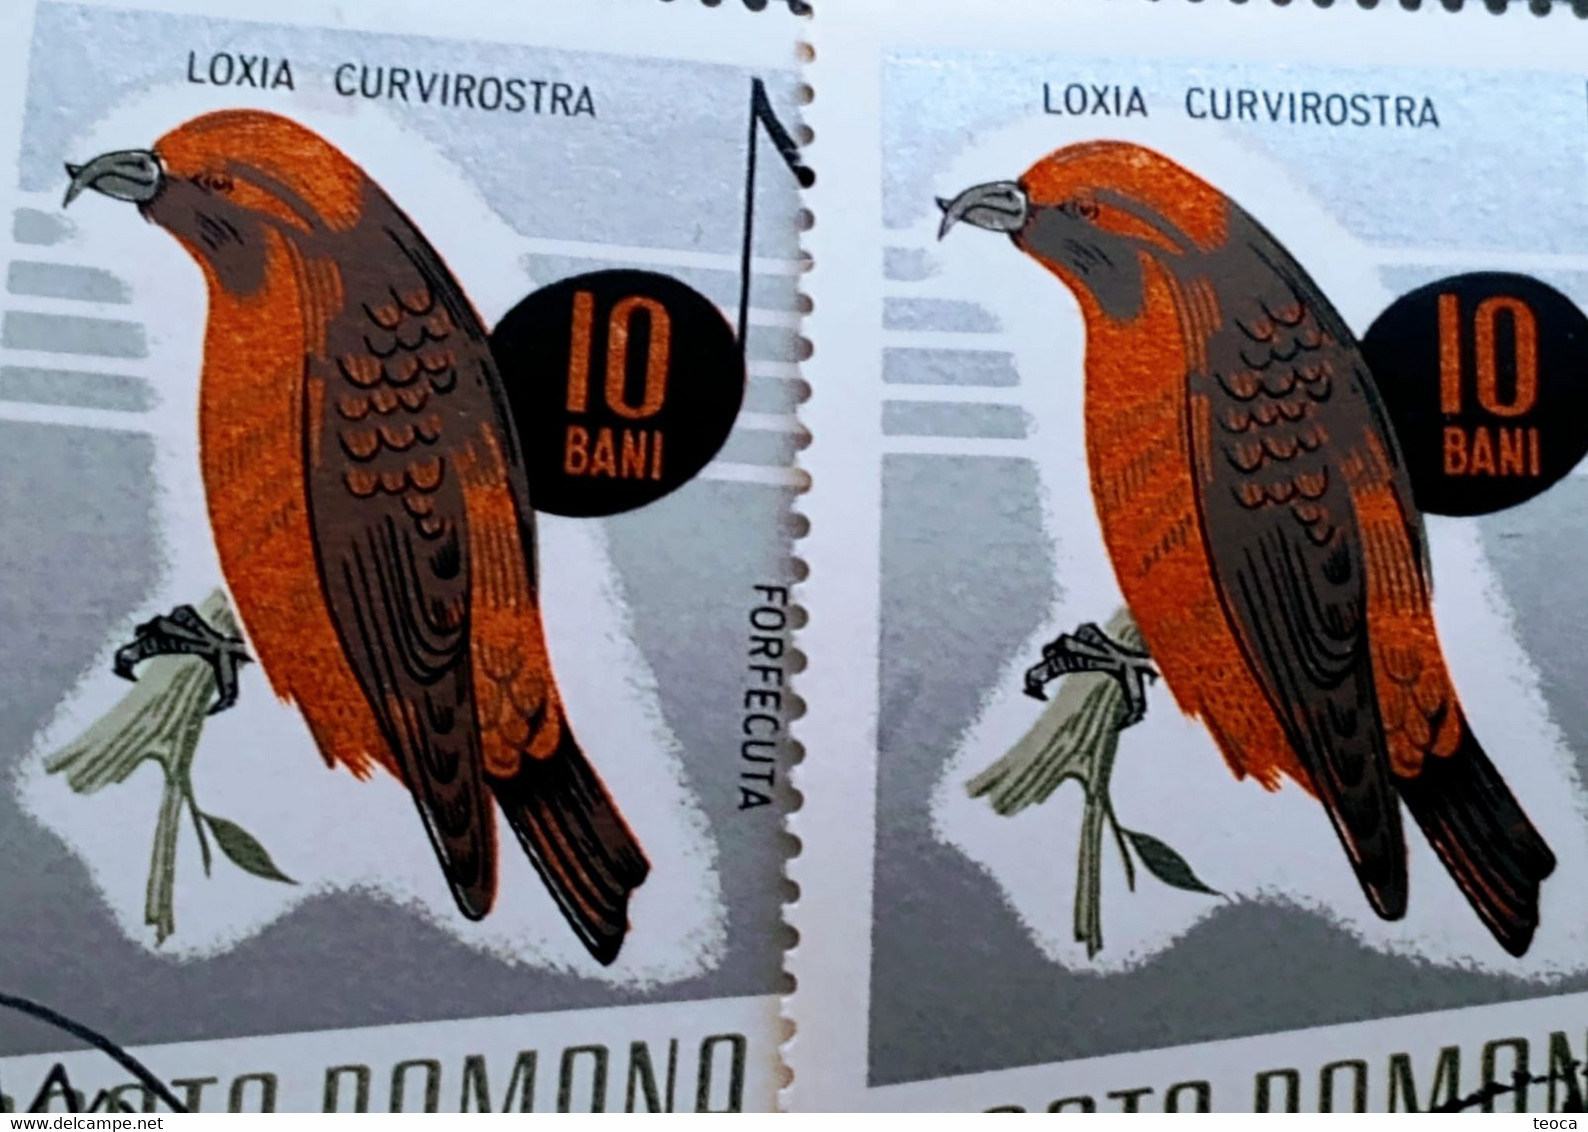 Errors Romania 1966 # MI 2501 Printed  With Displaced Bird , Songbirds - Errors, Freaks & Oddities (EFO)